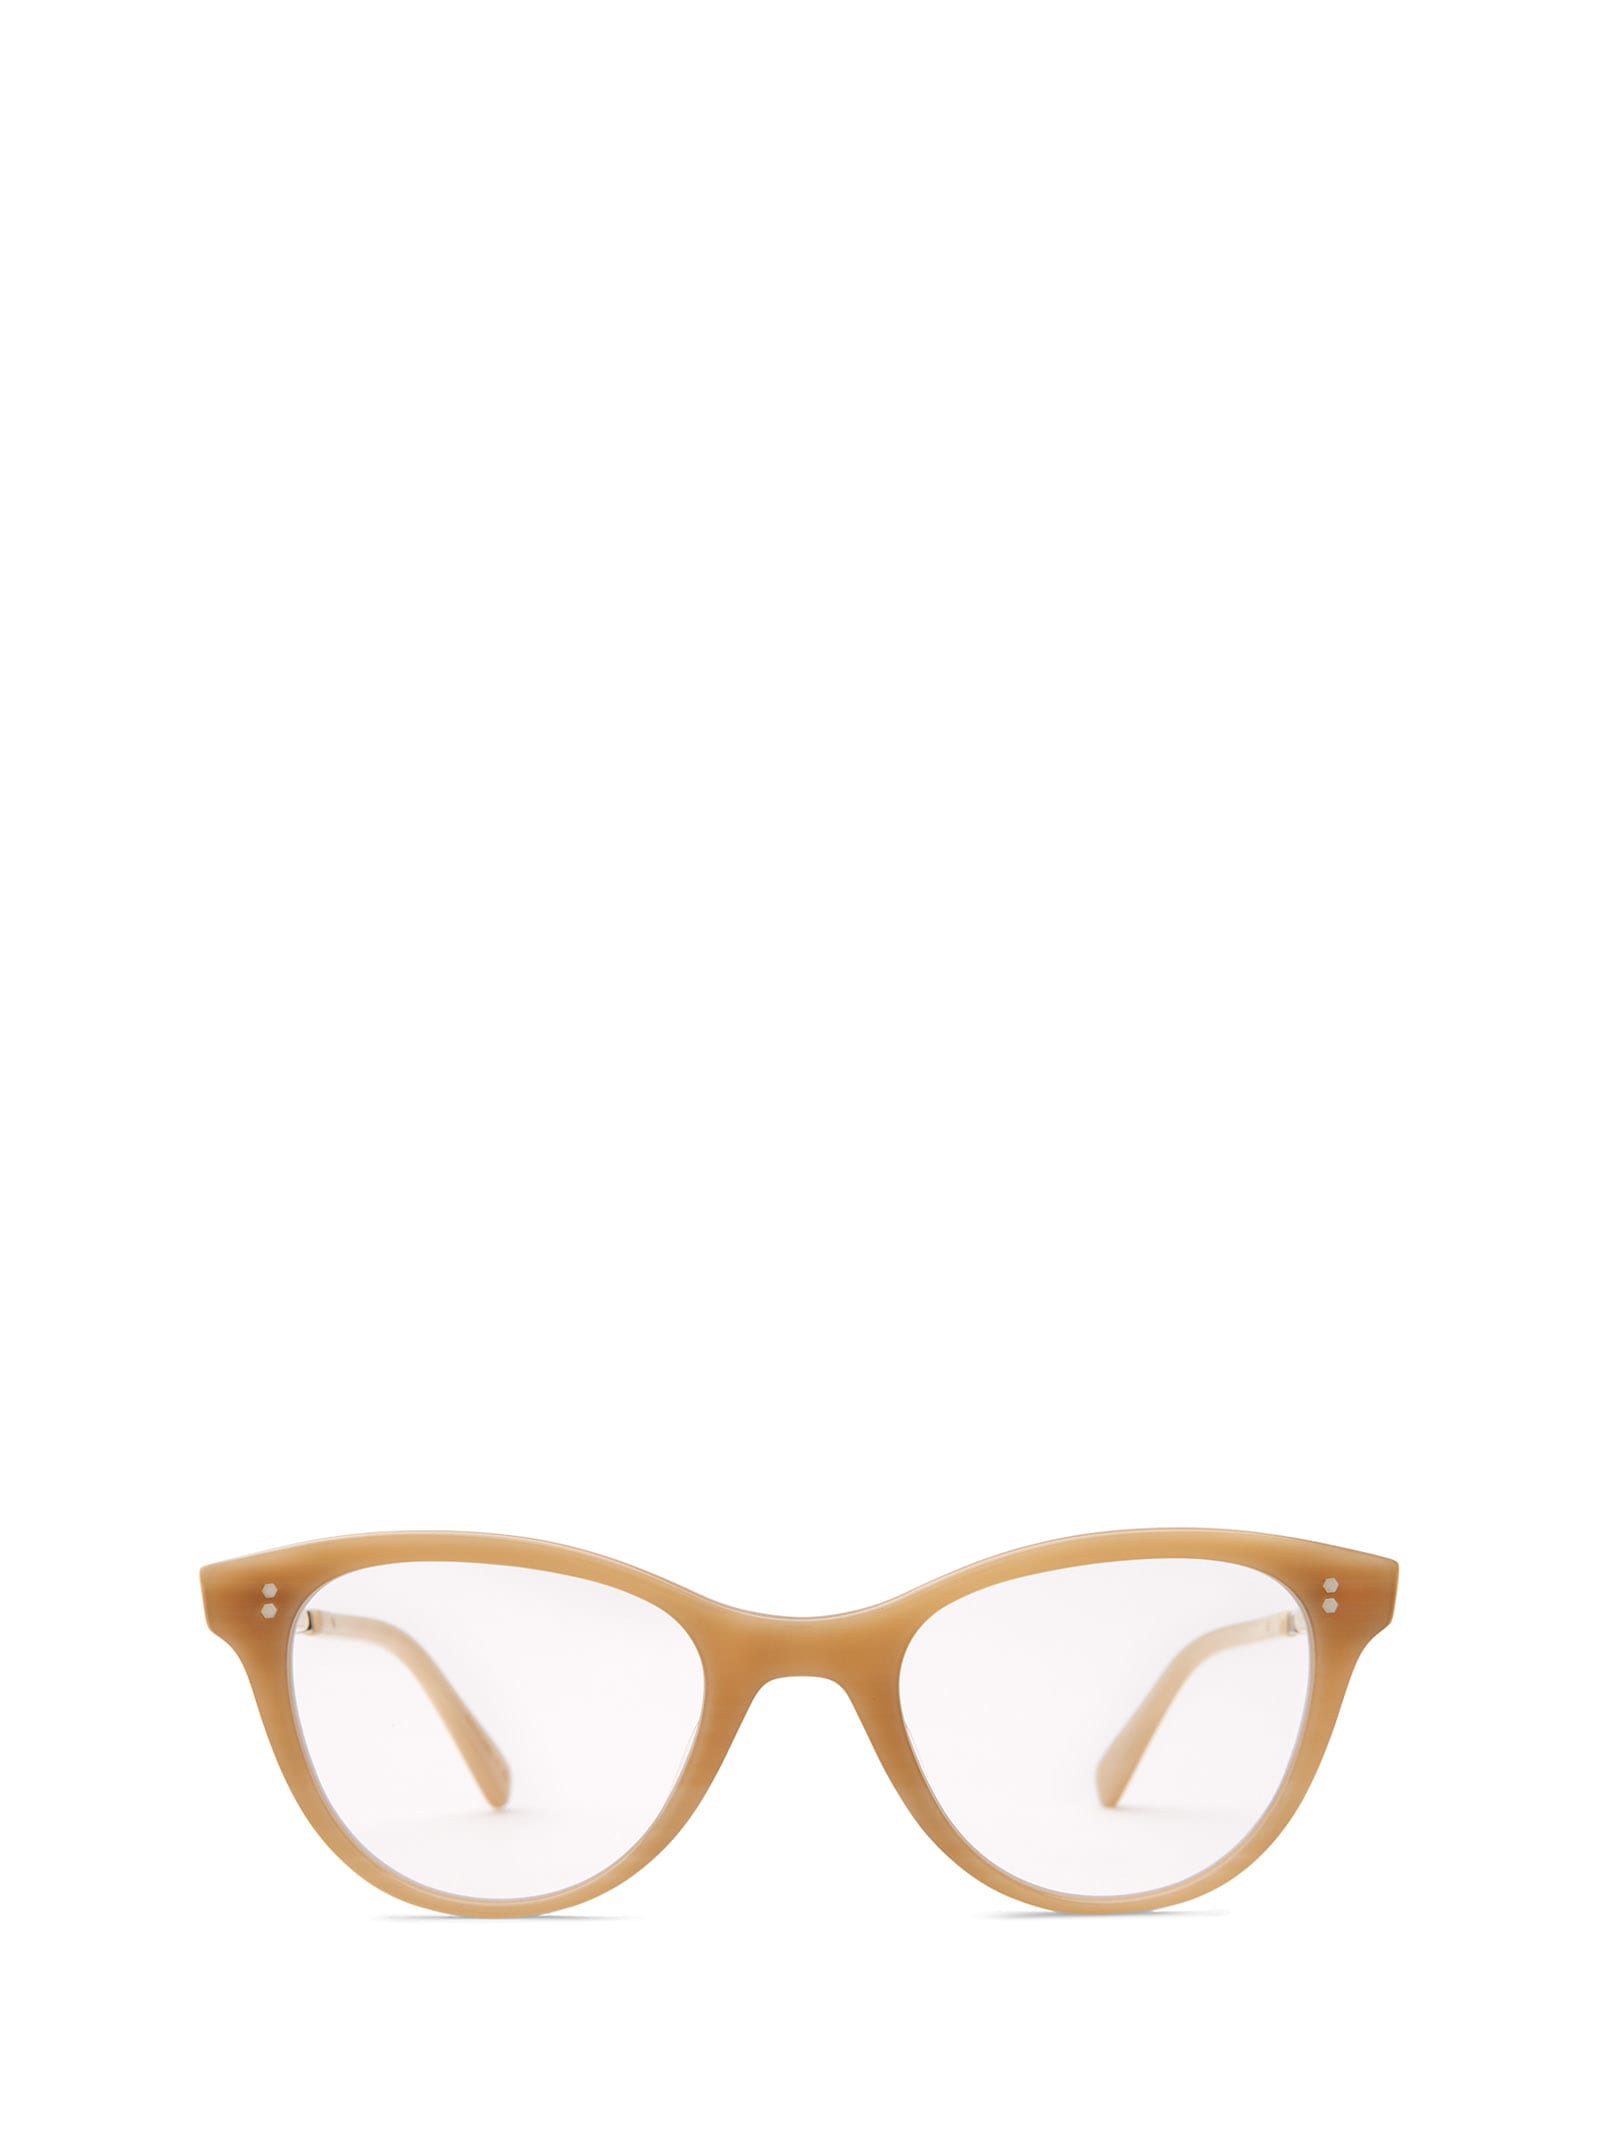 Taylor C Desert Sand-platinum Glasses